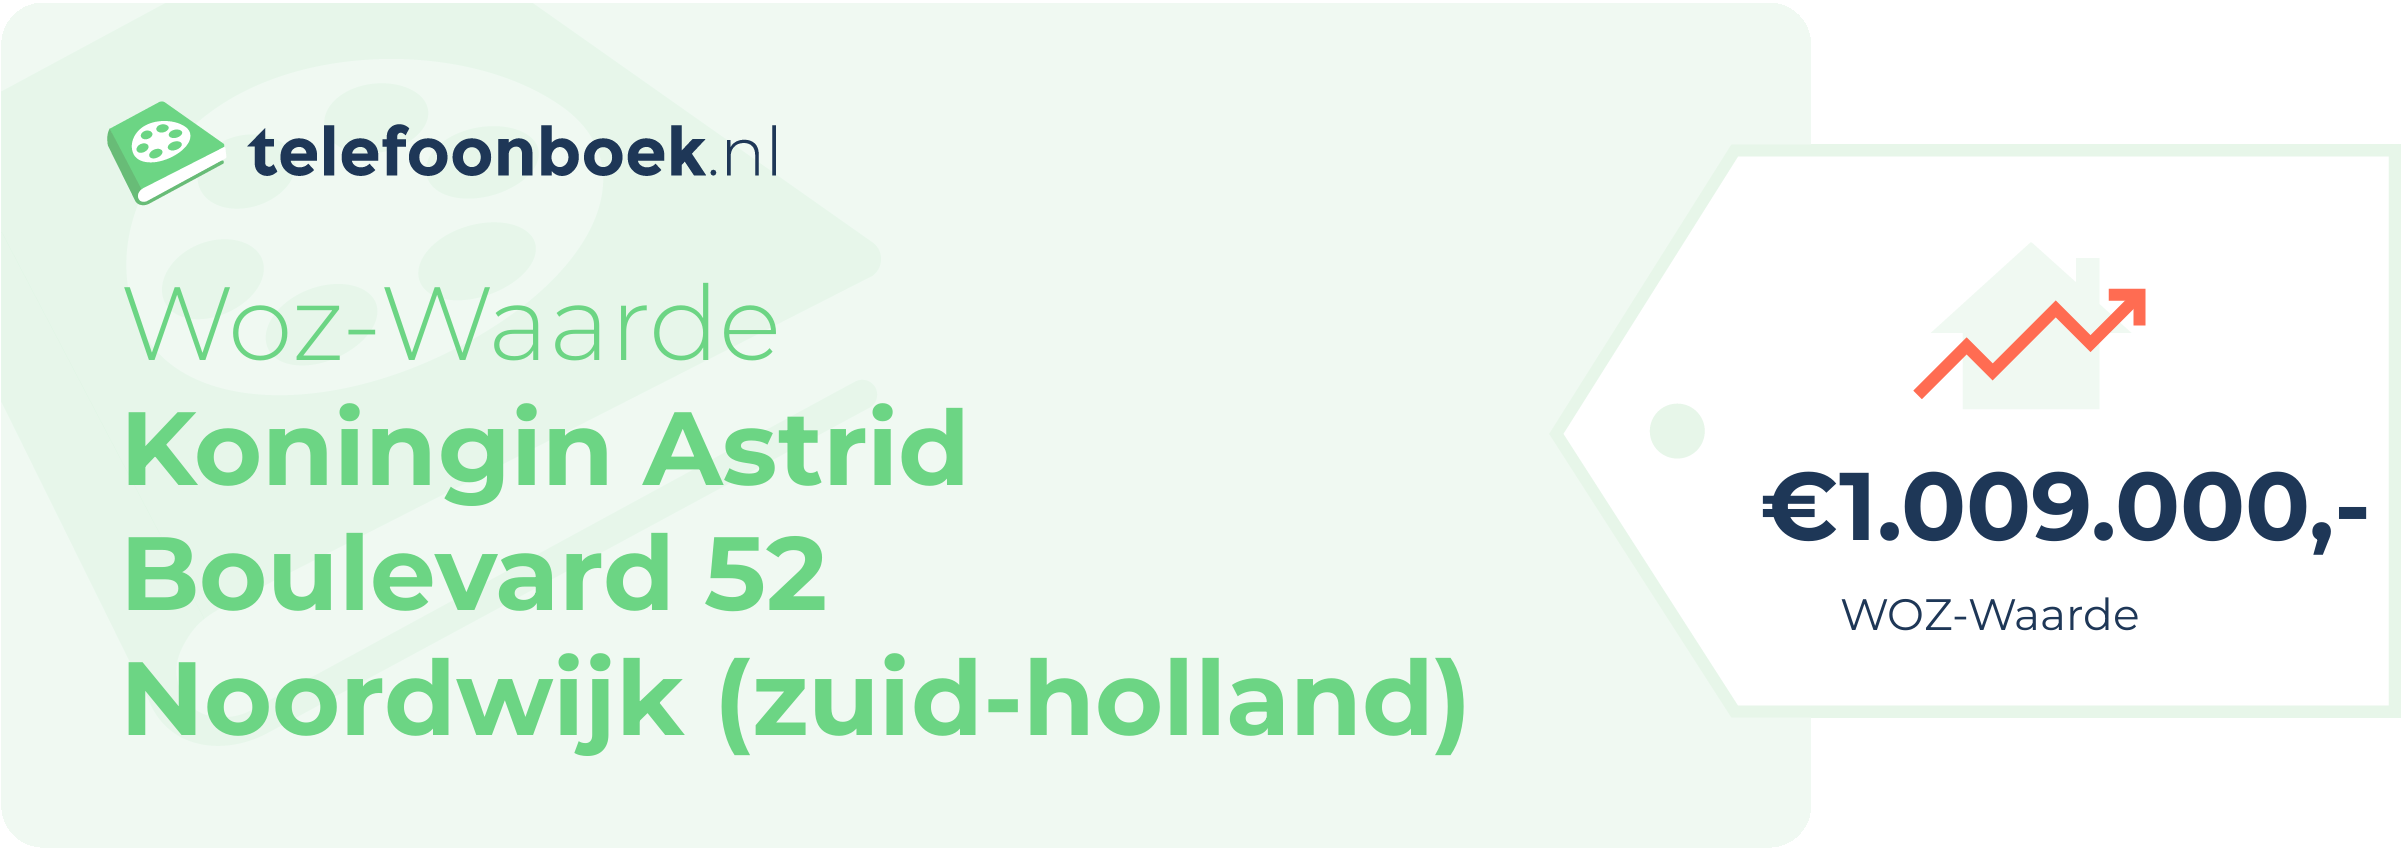 WOZ-waarde Koningin Astrid Boulevard 52 Noordwijk (Zuid-Holland)